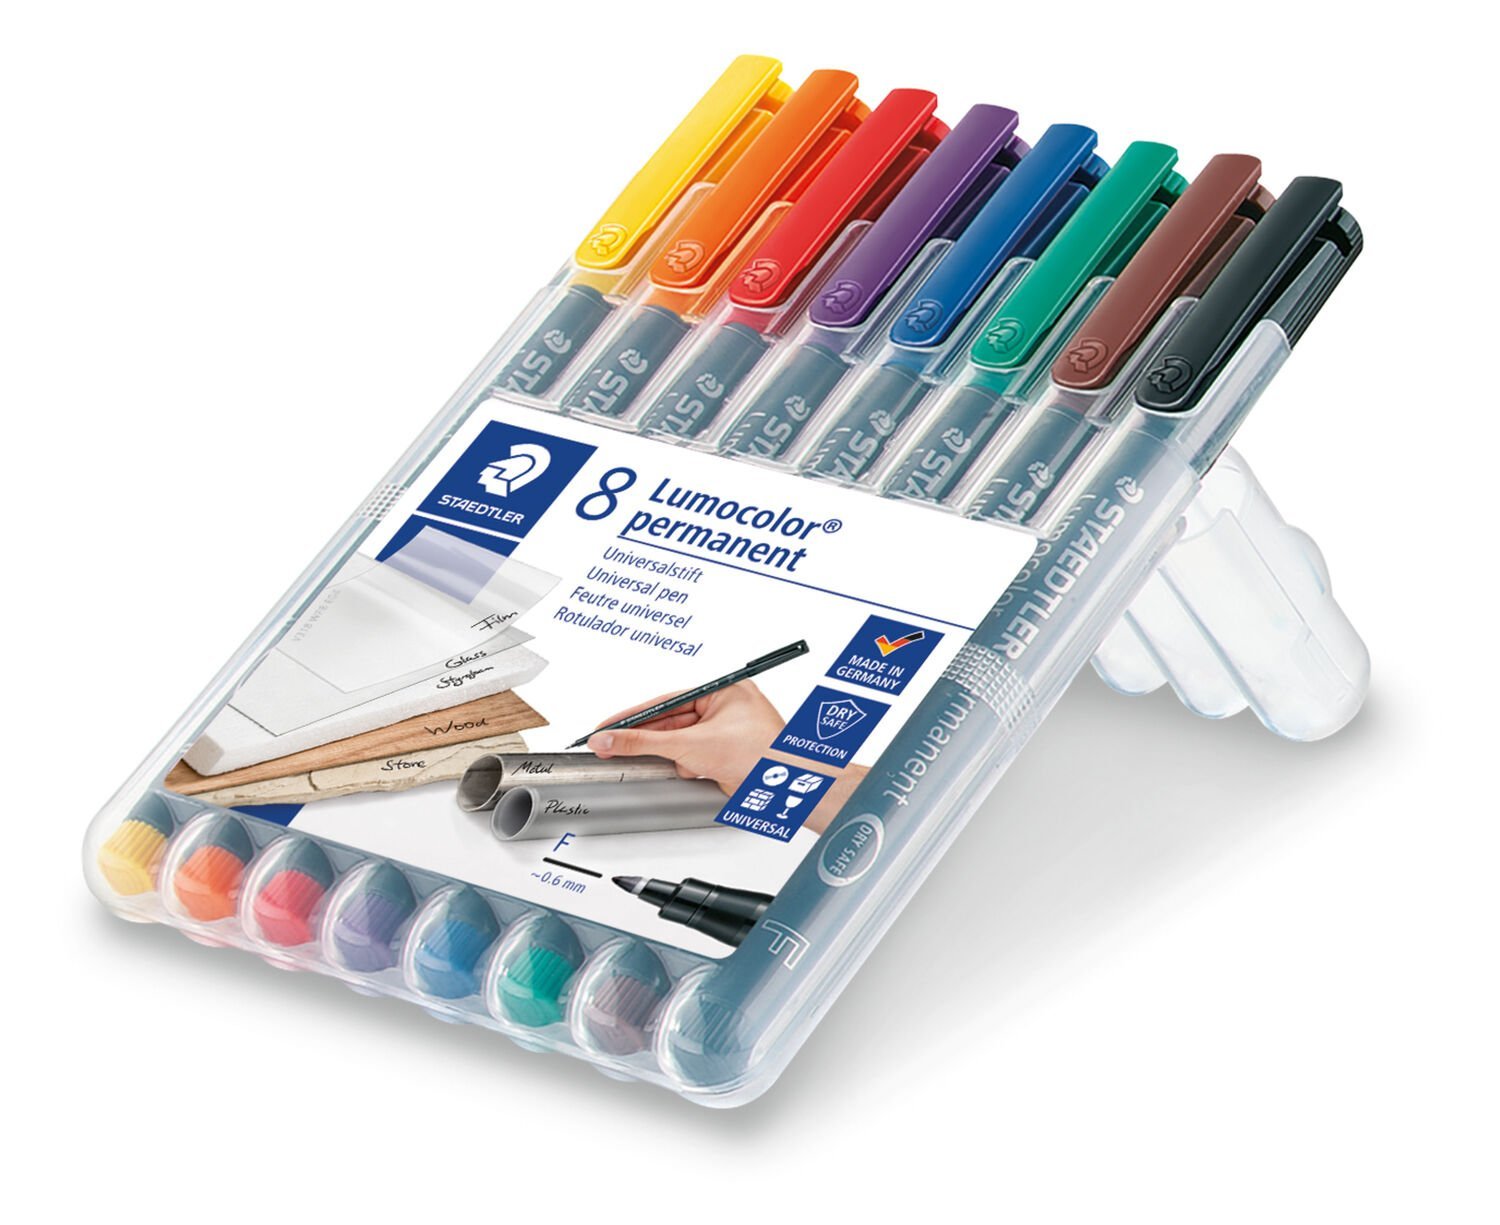 Lumocolor® permanent pen 318 - Permanente universele pen F